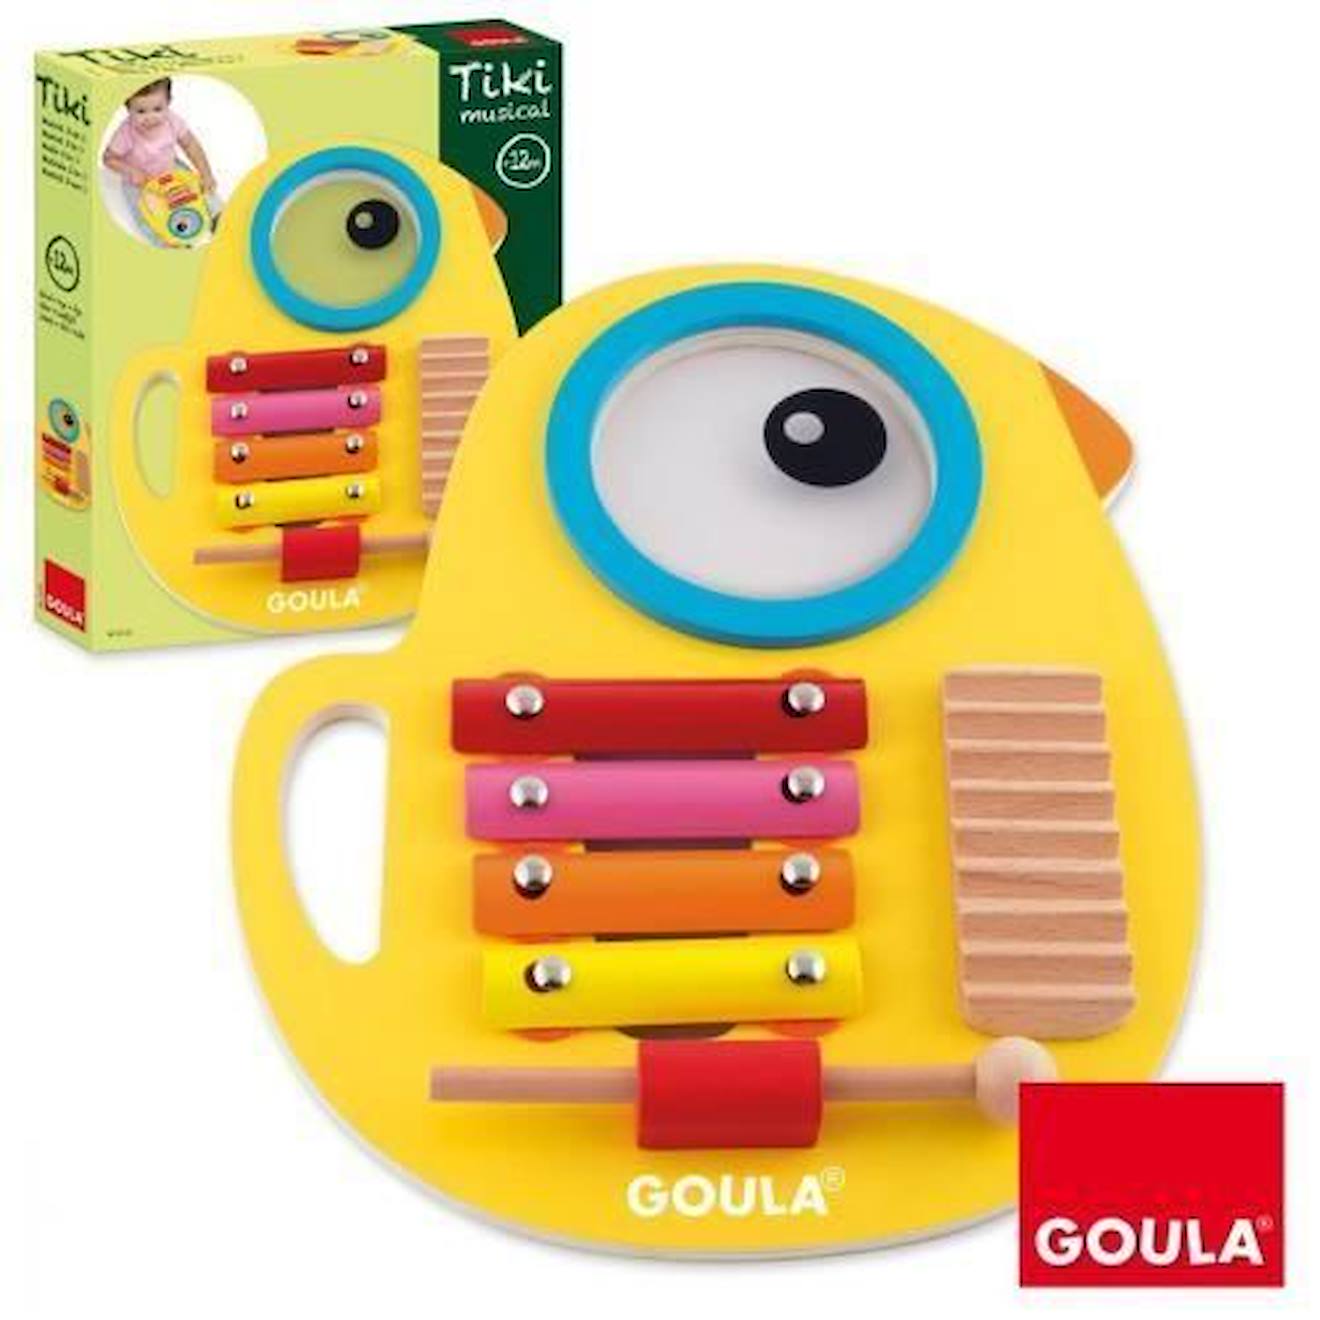 Jouet musical - Goula - Tiki musical 3 en 1 - Pour bébé - Mixte jaune -  Goula